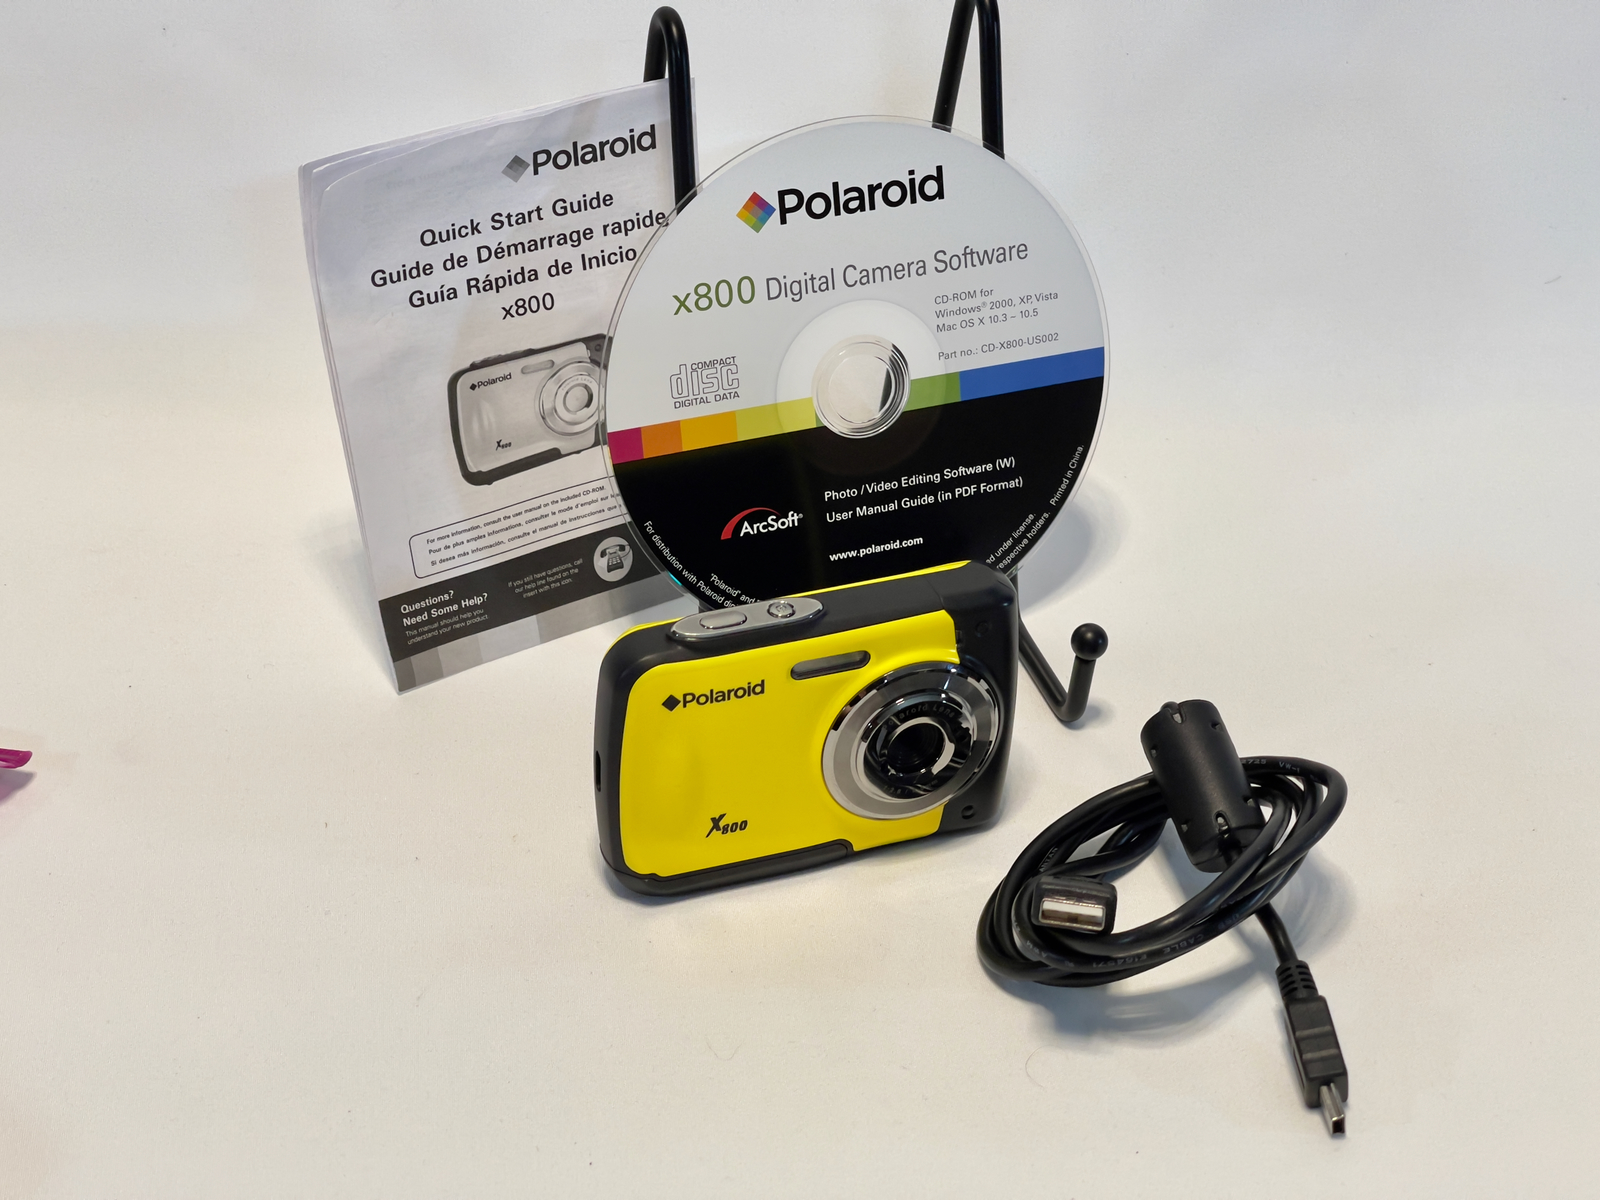 Primary image for Polaroid 8MP Digital Camera - Yellow Waterproof - Model x800